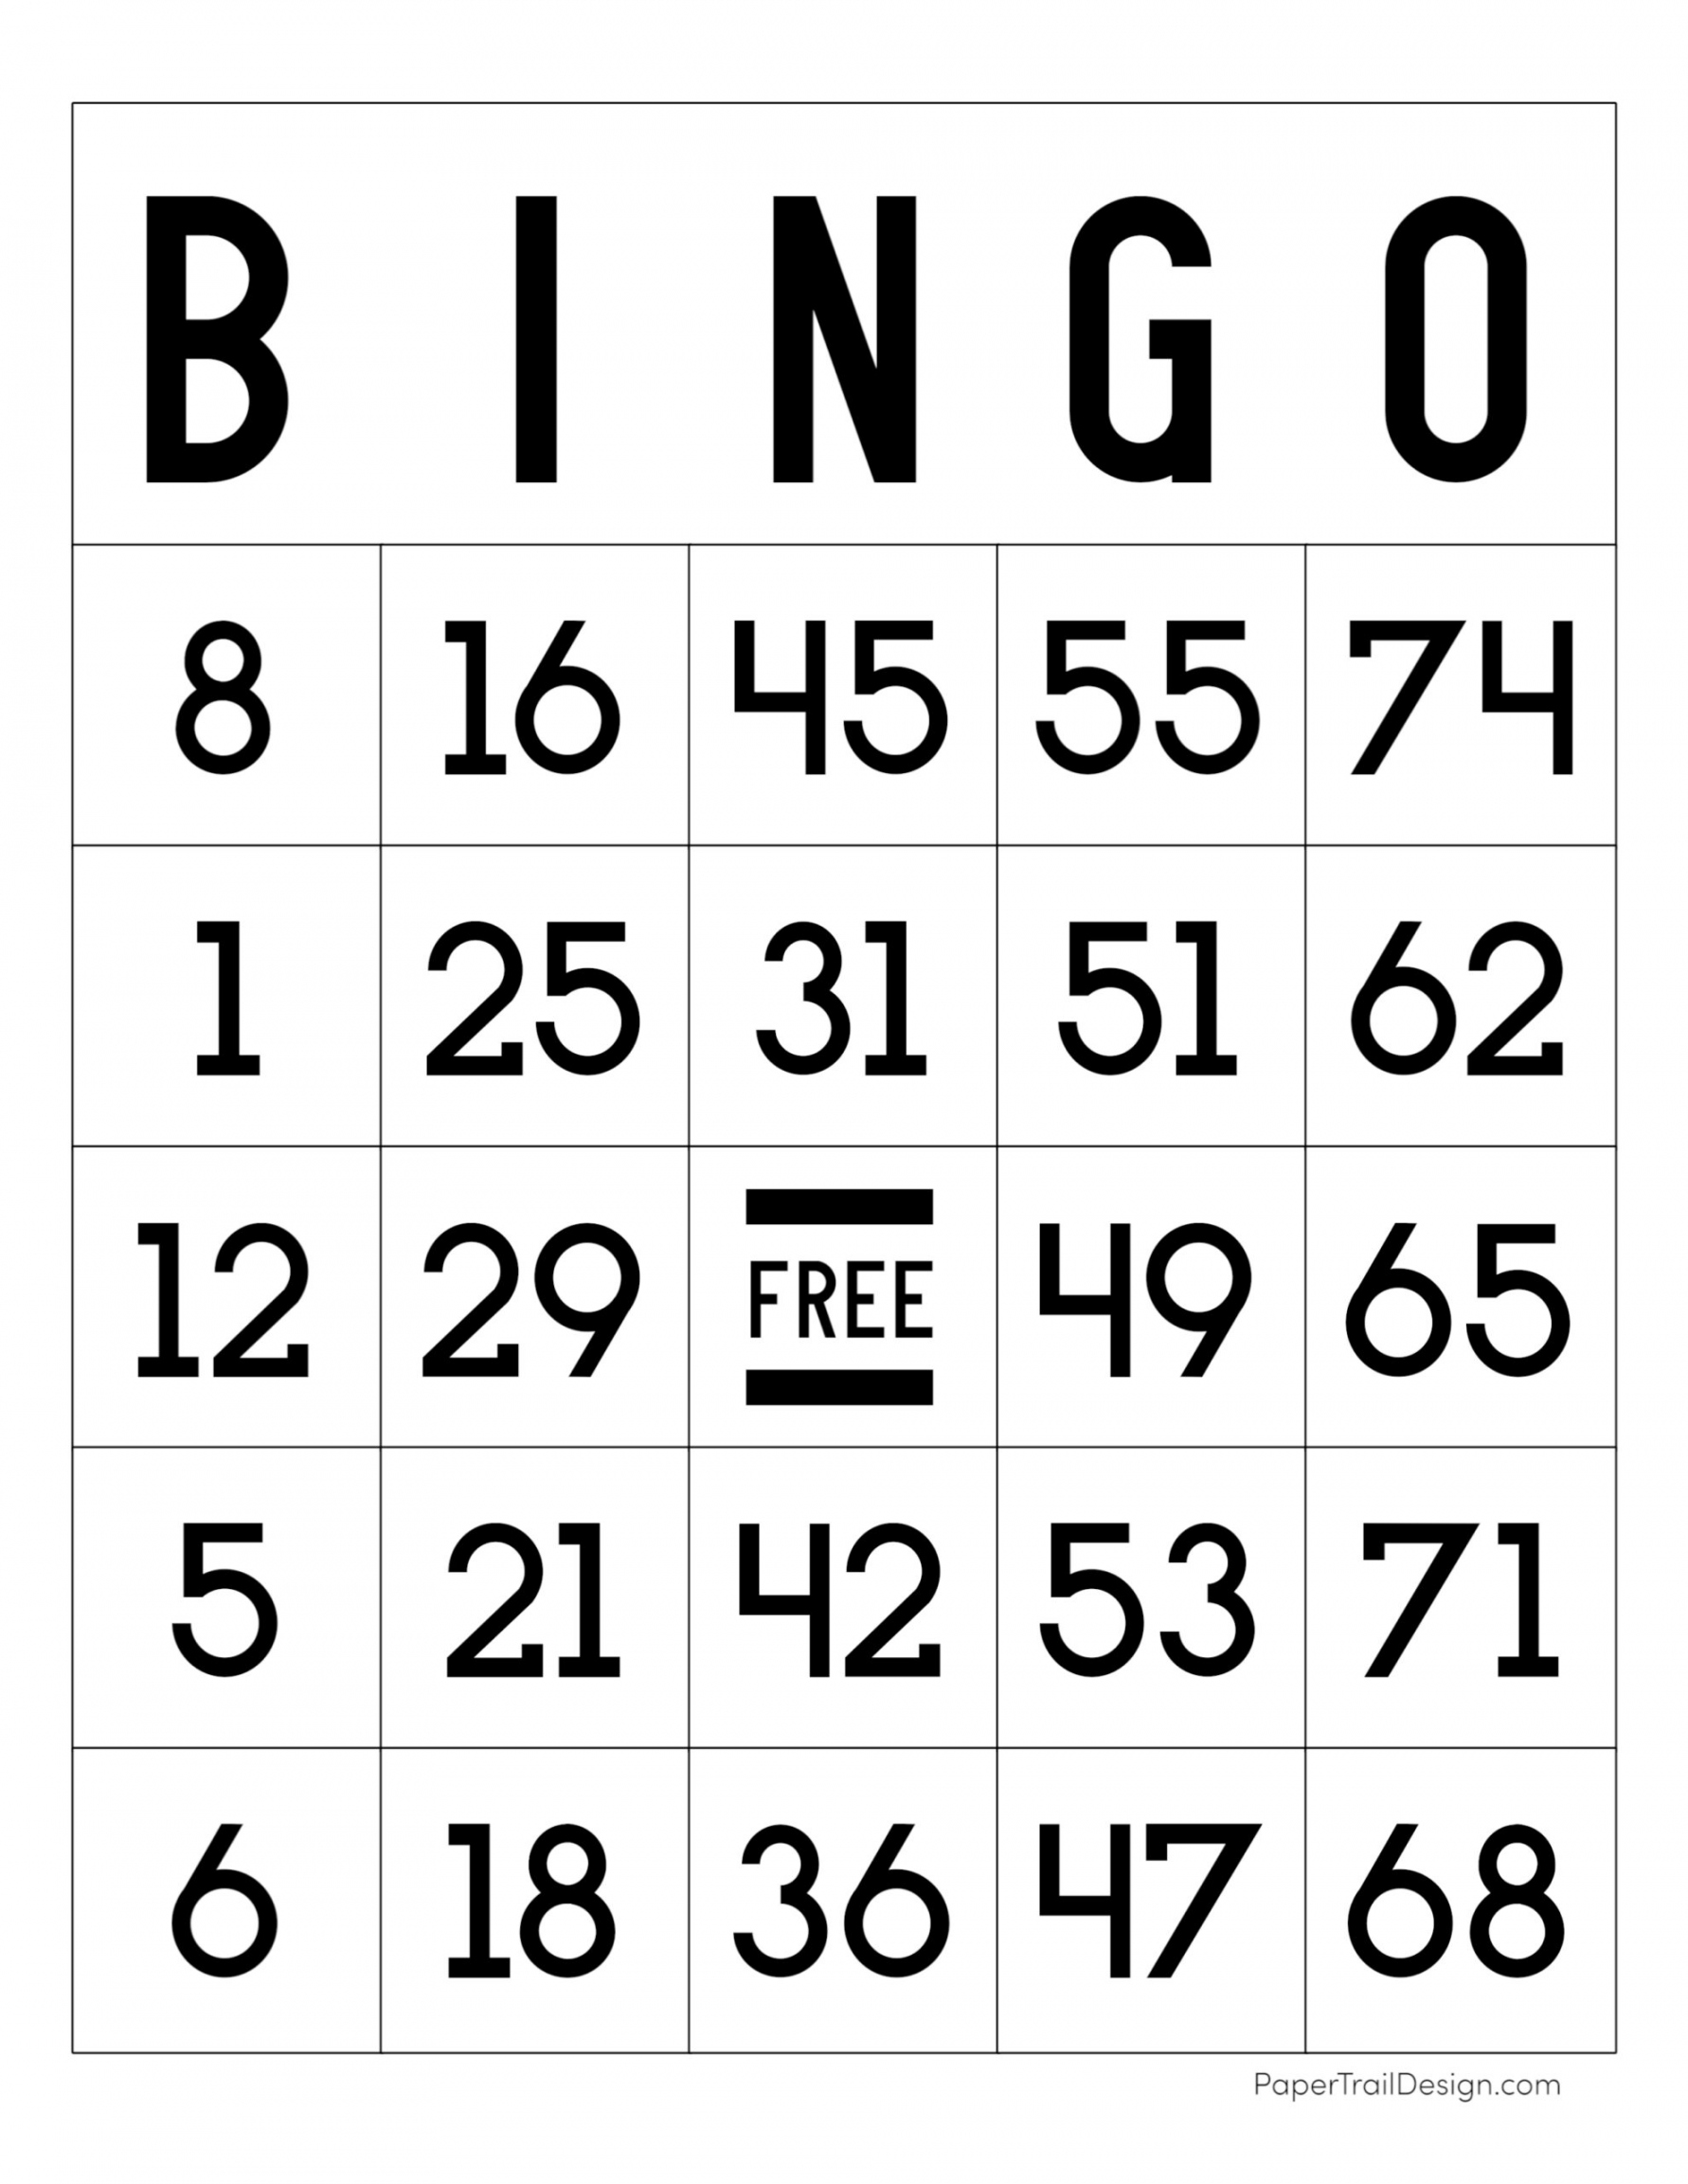 Free Printable Bingo Cards - Paper Trail Design